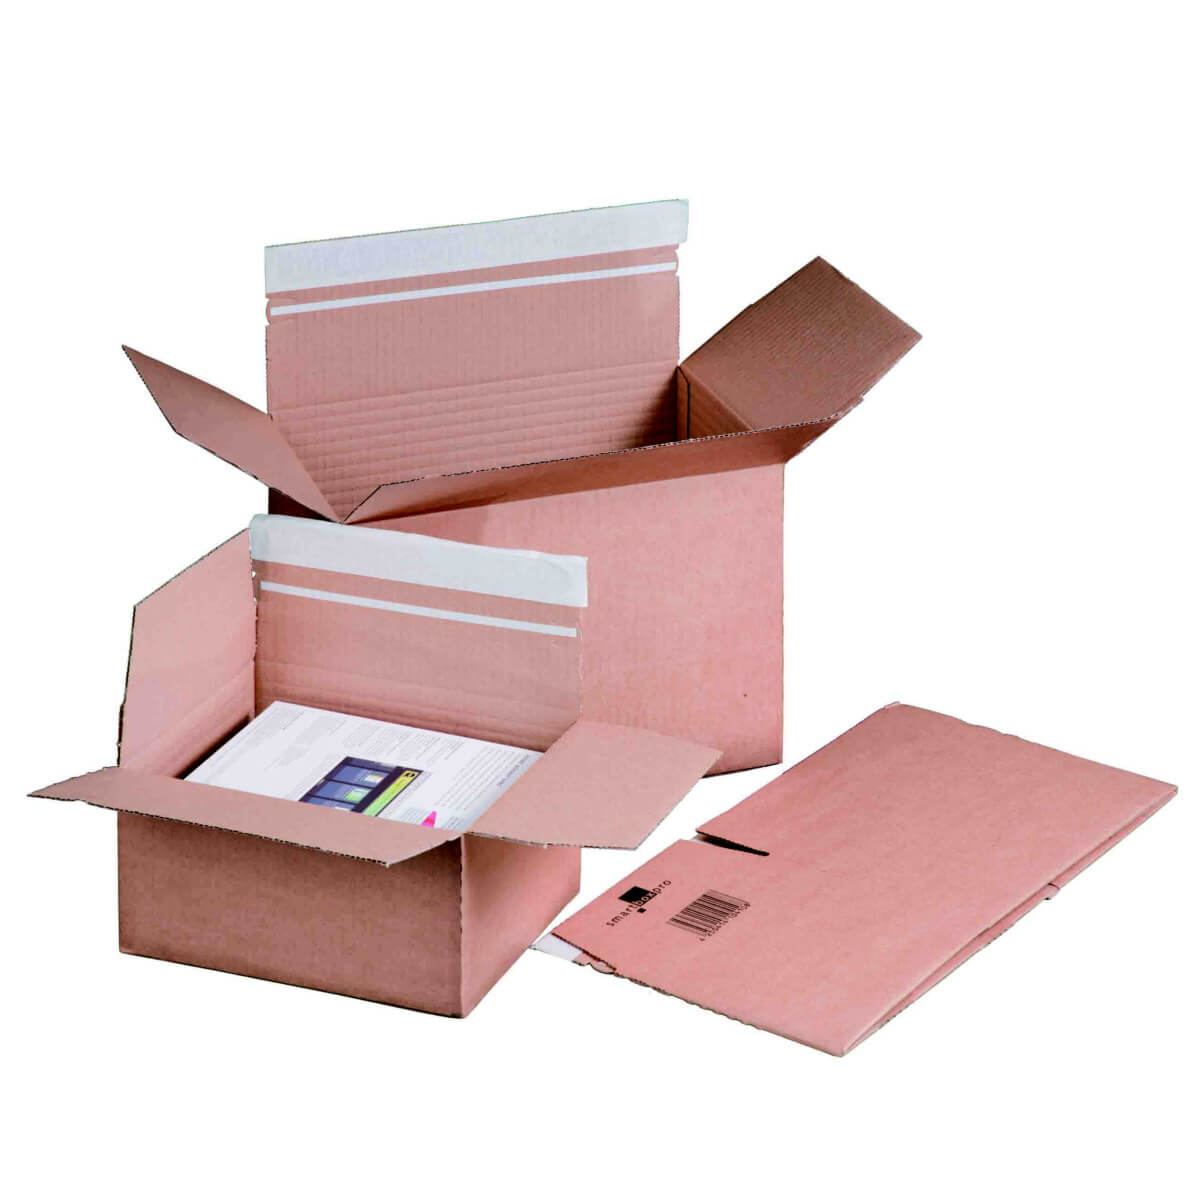 Hinged cardboard box 540x380x160 mm